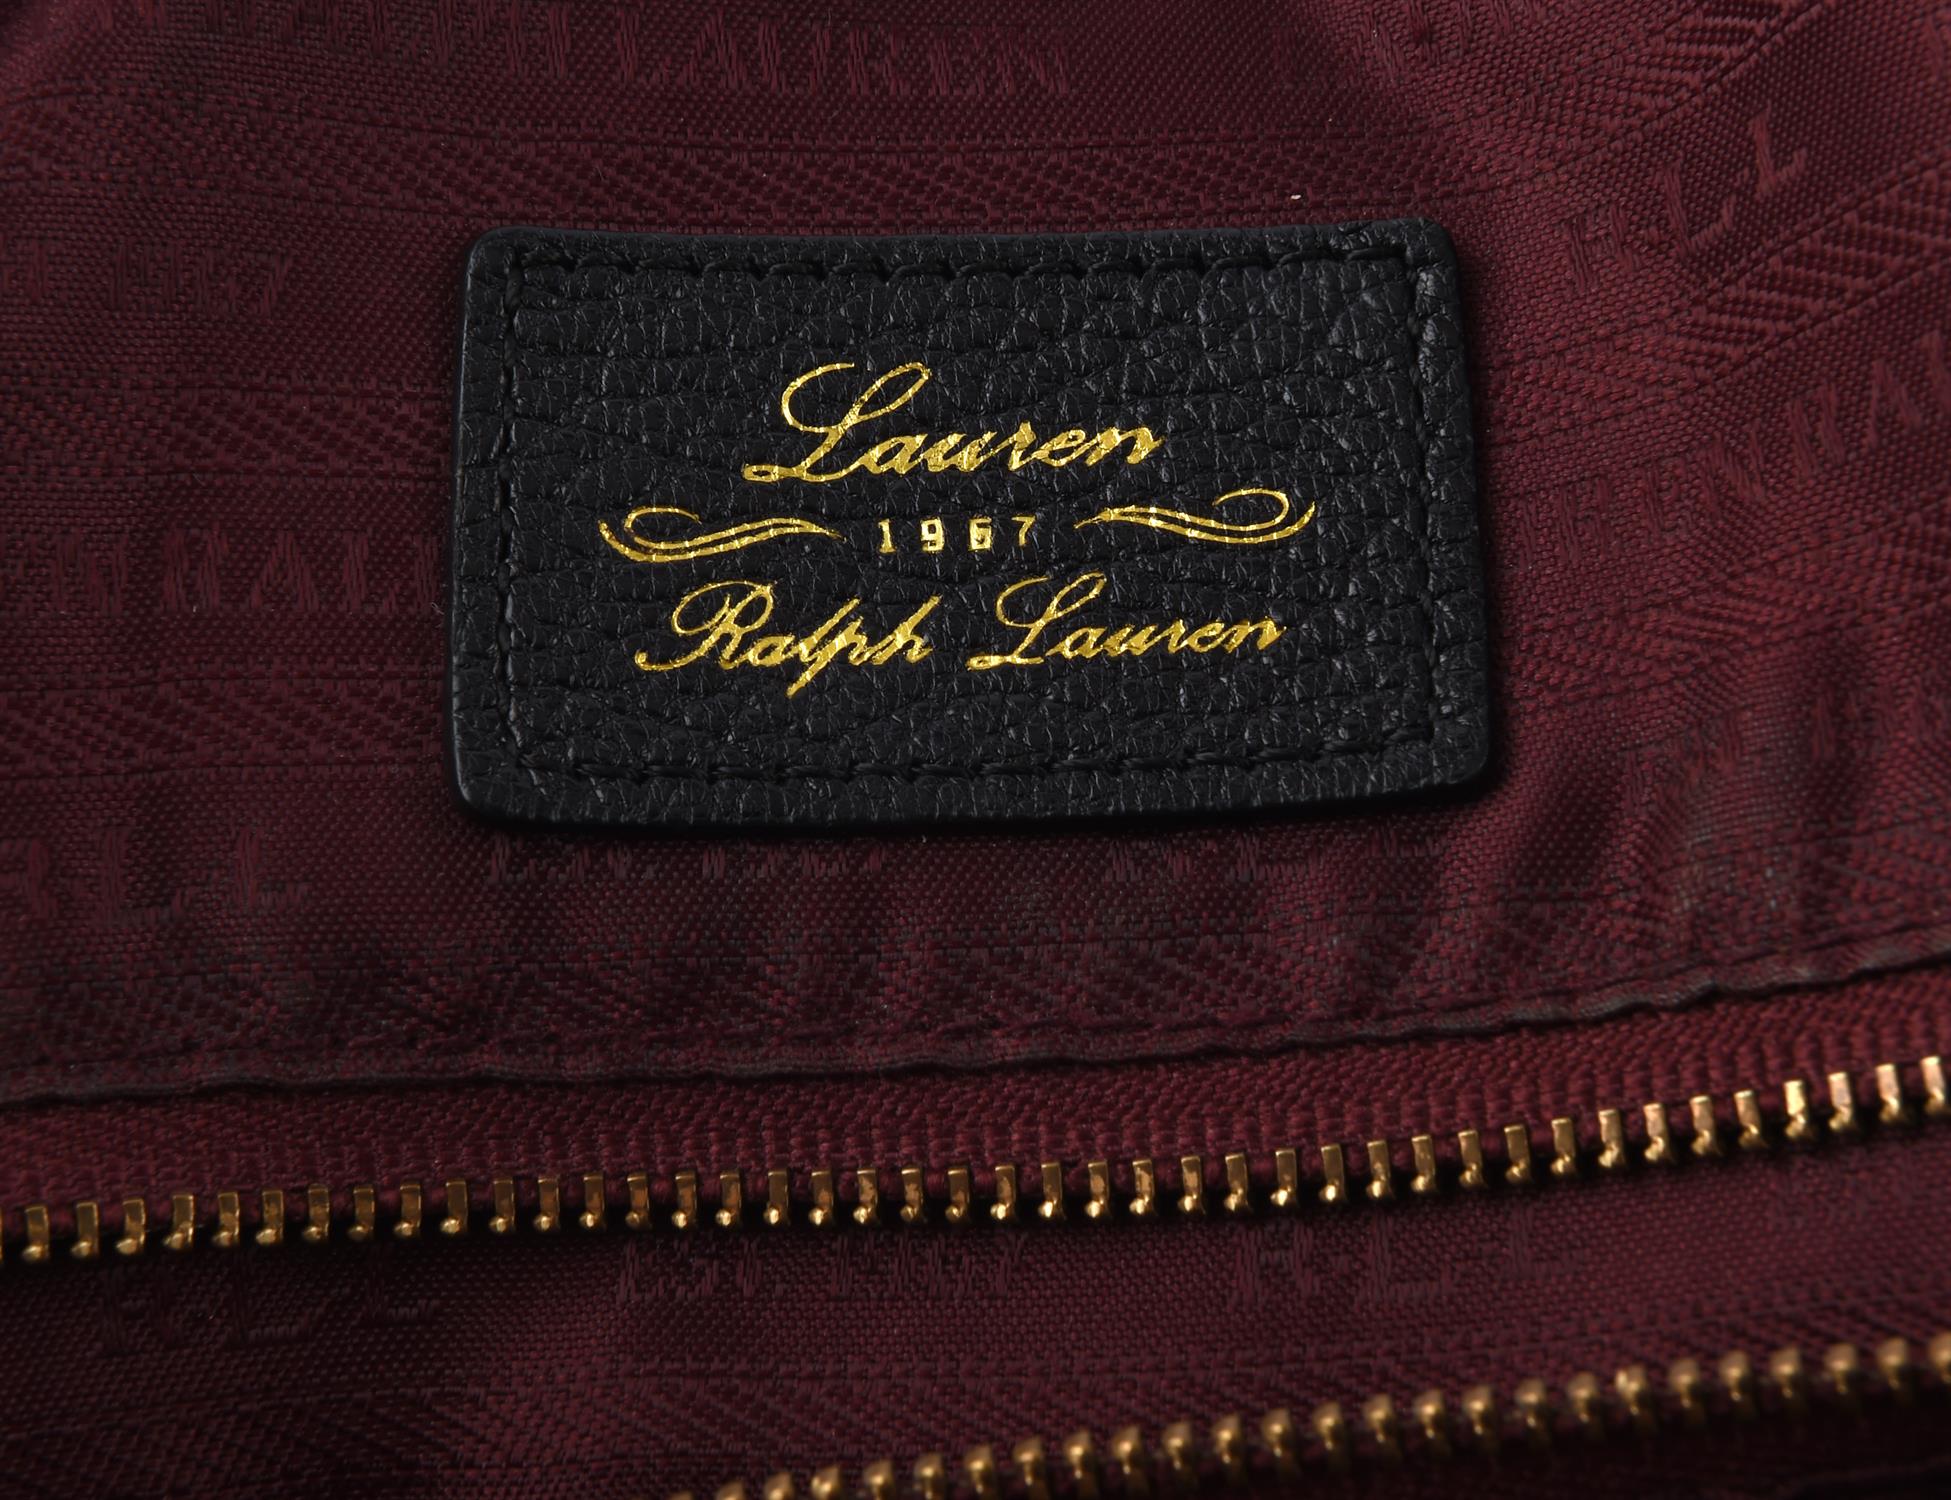 RALPH LAUREN black leather handbag (45cm x 27cm x 13cm) gold coloured hardware - Image 3 of 3